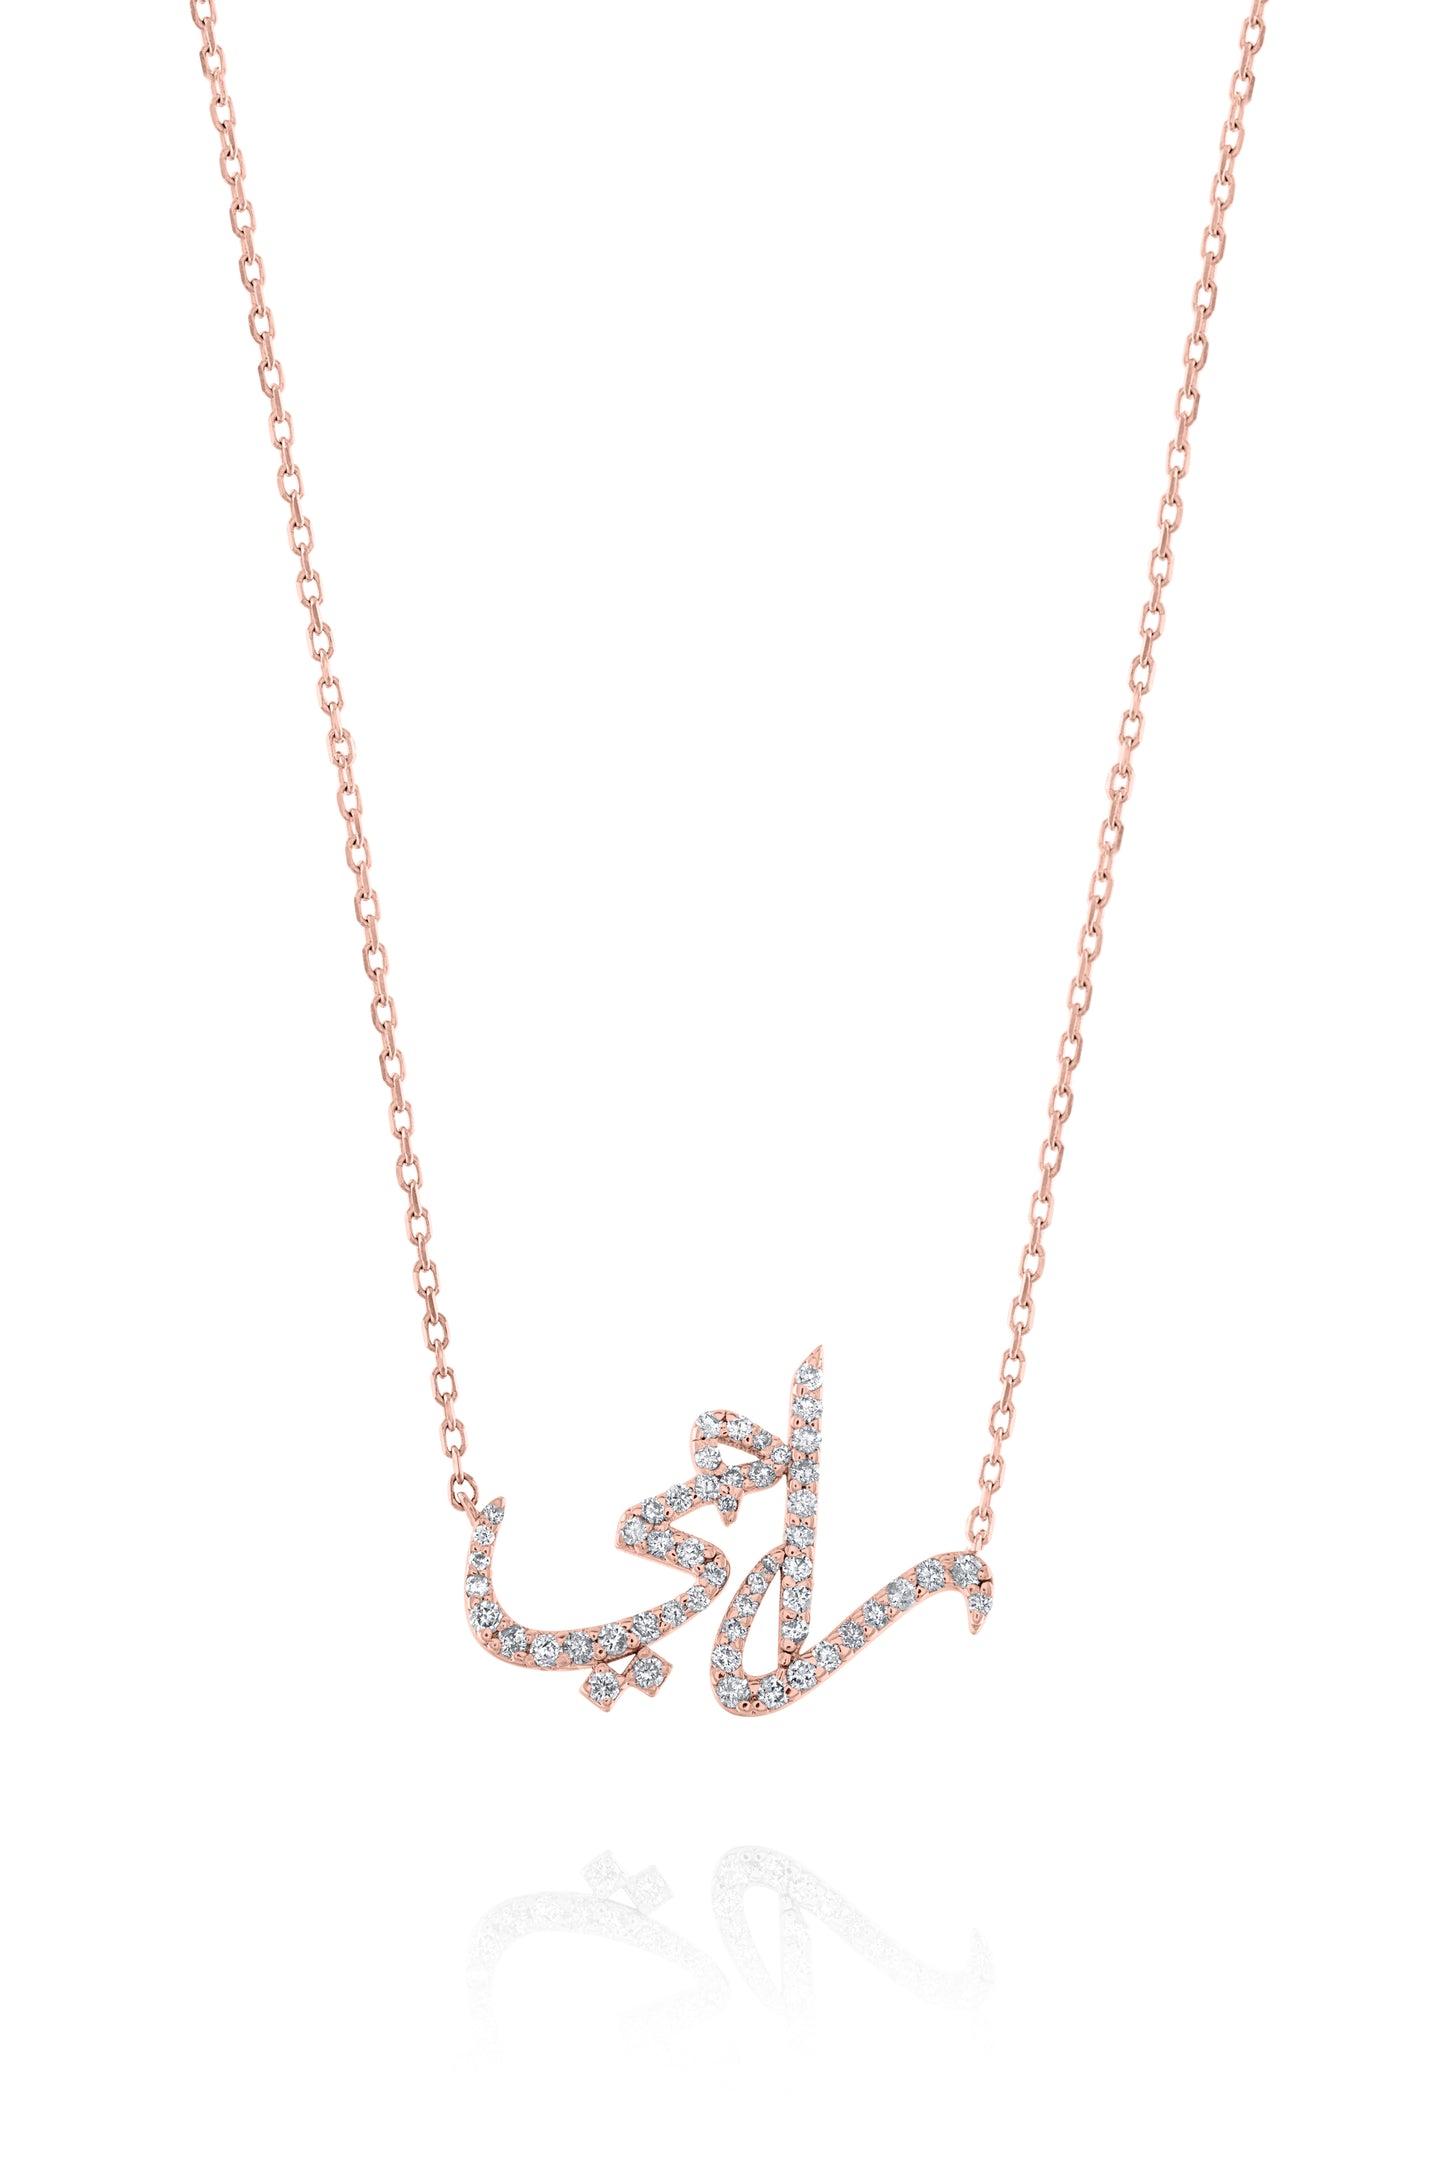 Personalized Diamond Arabic Name Necklace